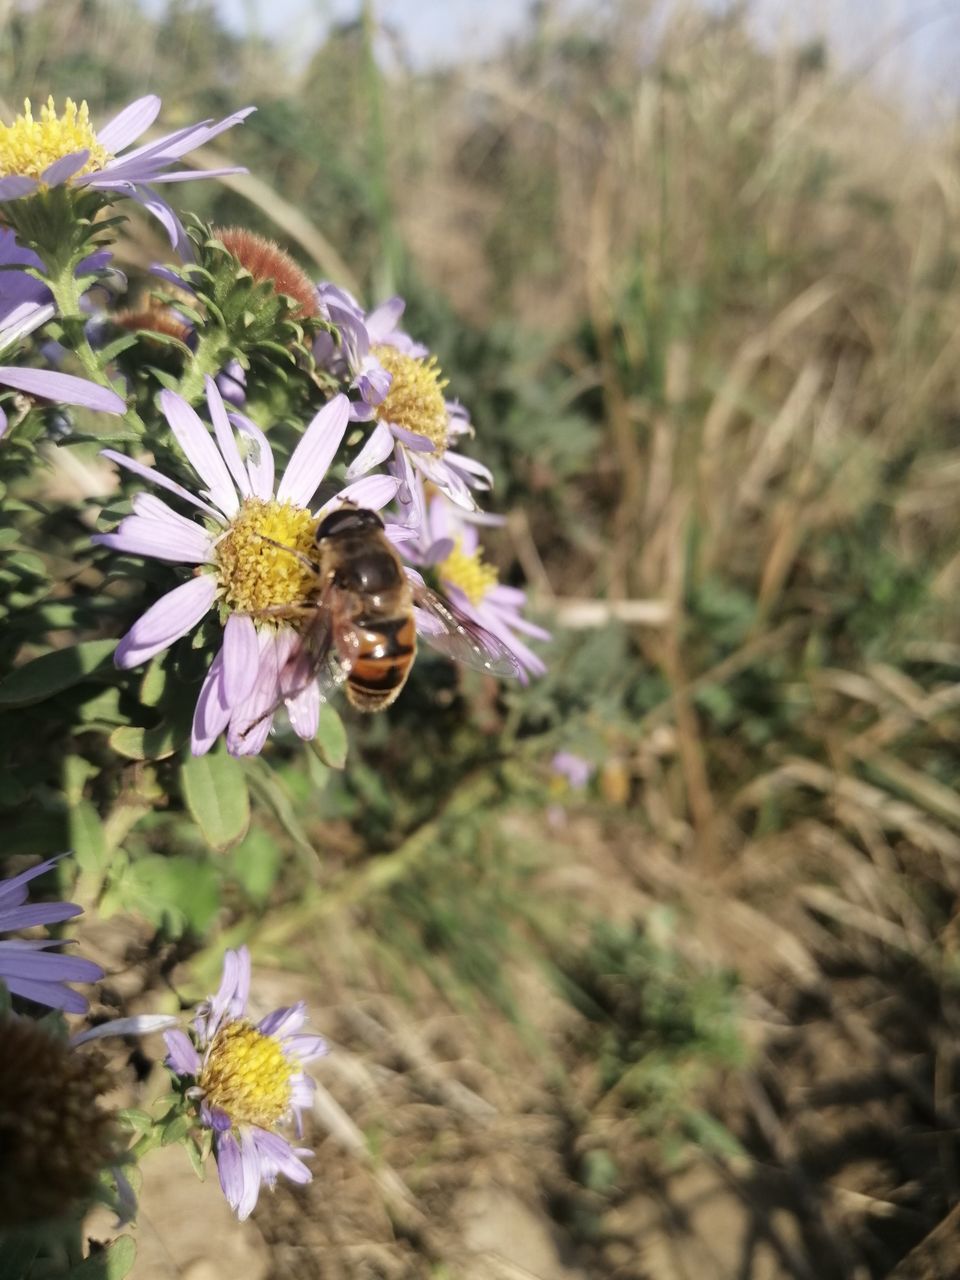 CLOSE-UP OF HONEY BEE ON PURPLE FLOWERING